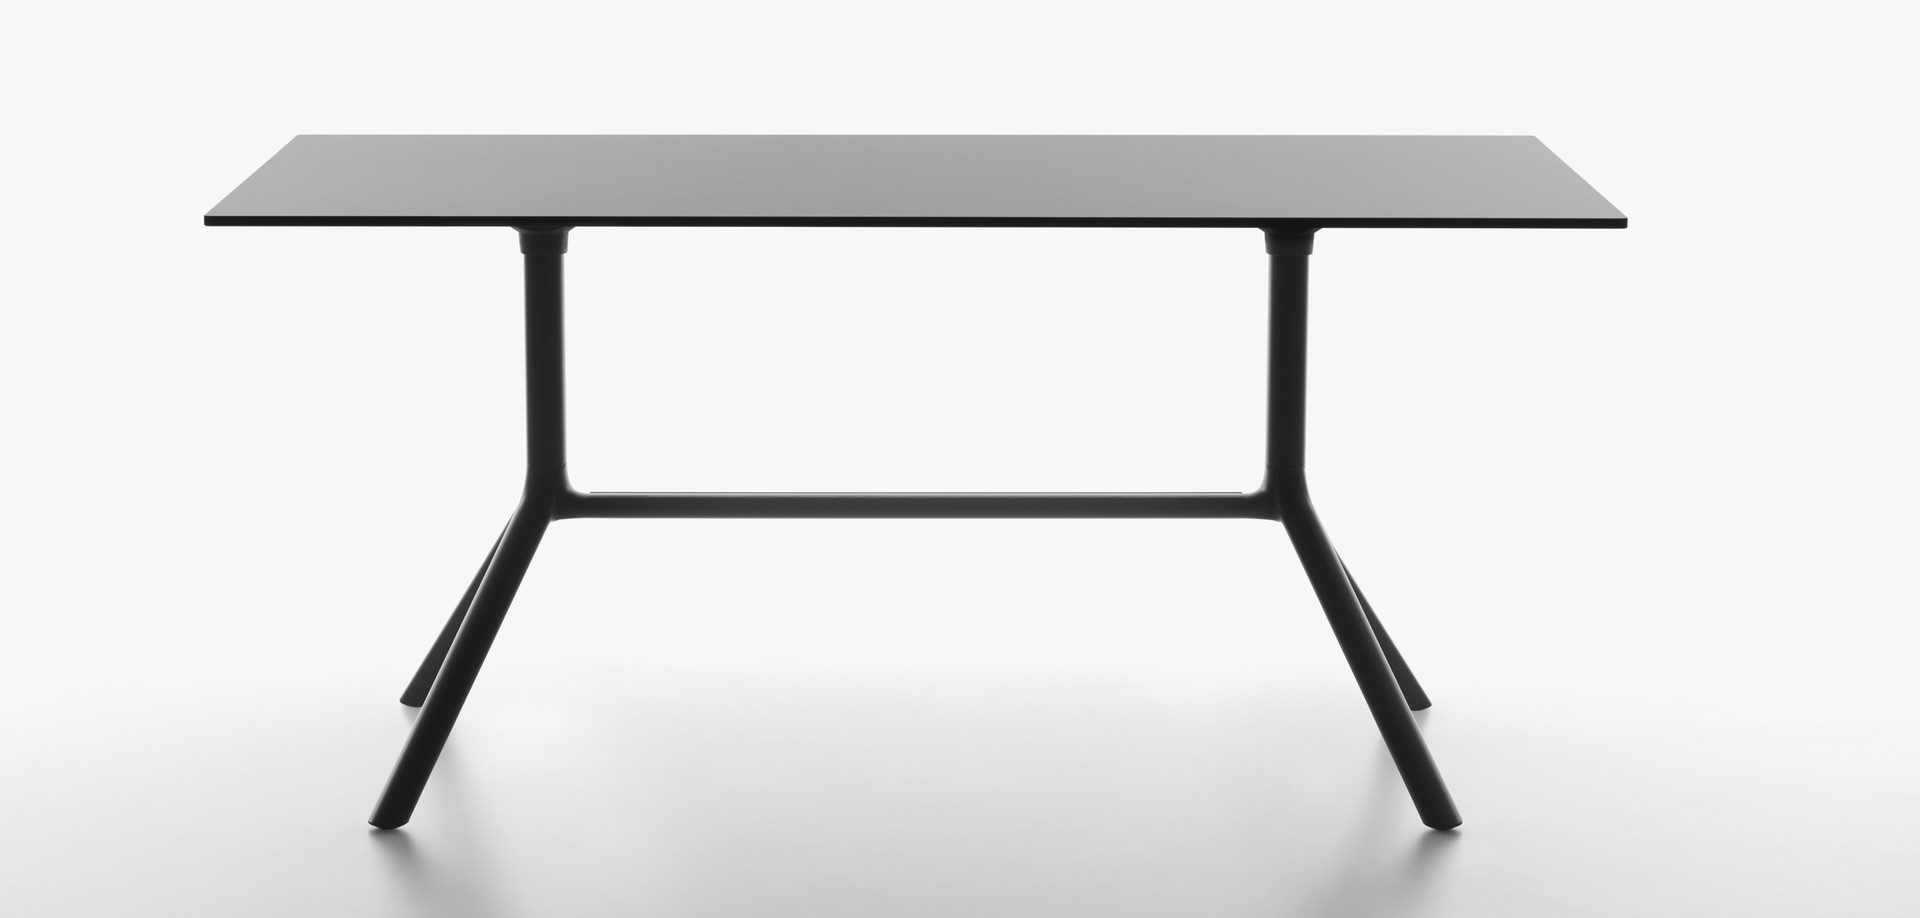 Plank - MIURA table rectangular table top, 73 cm high, black